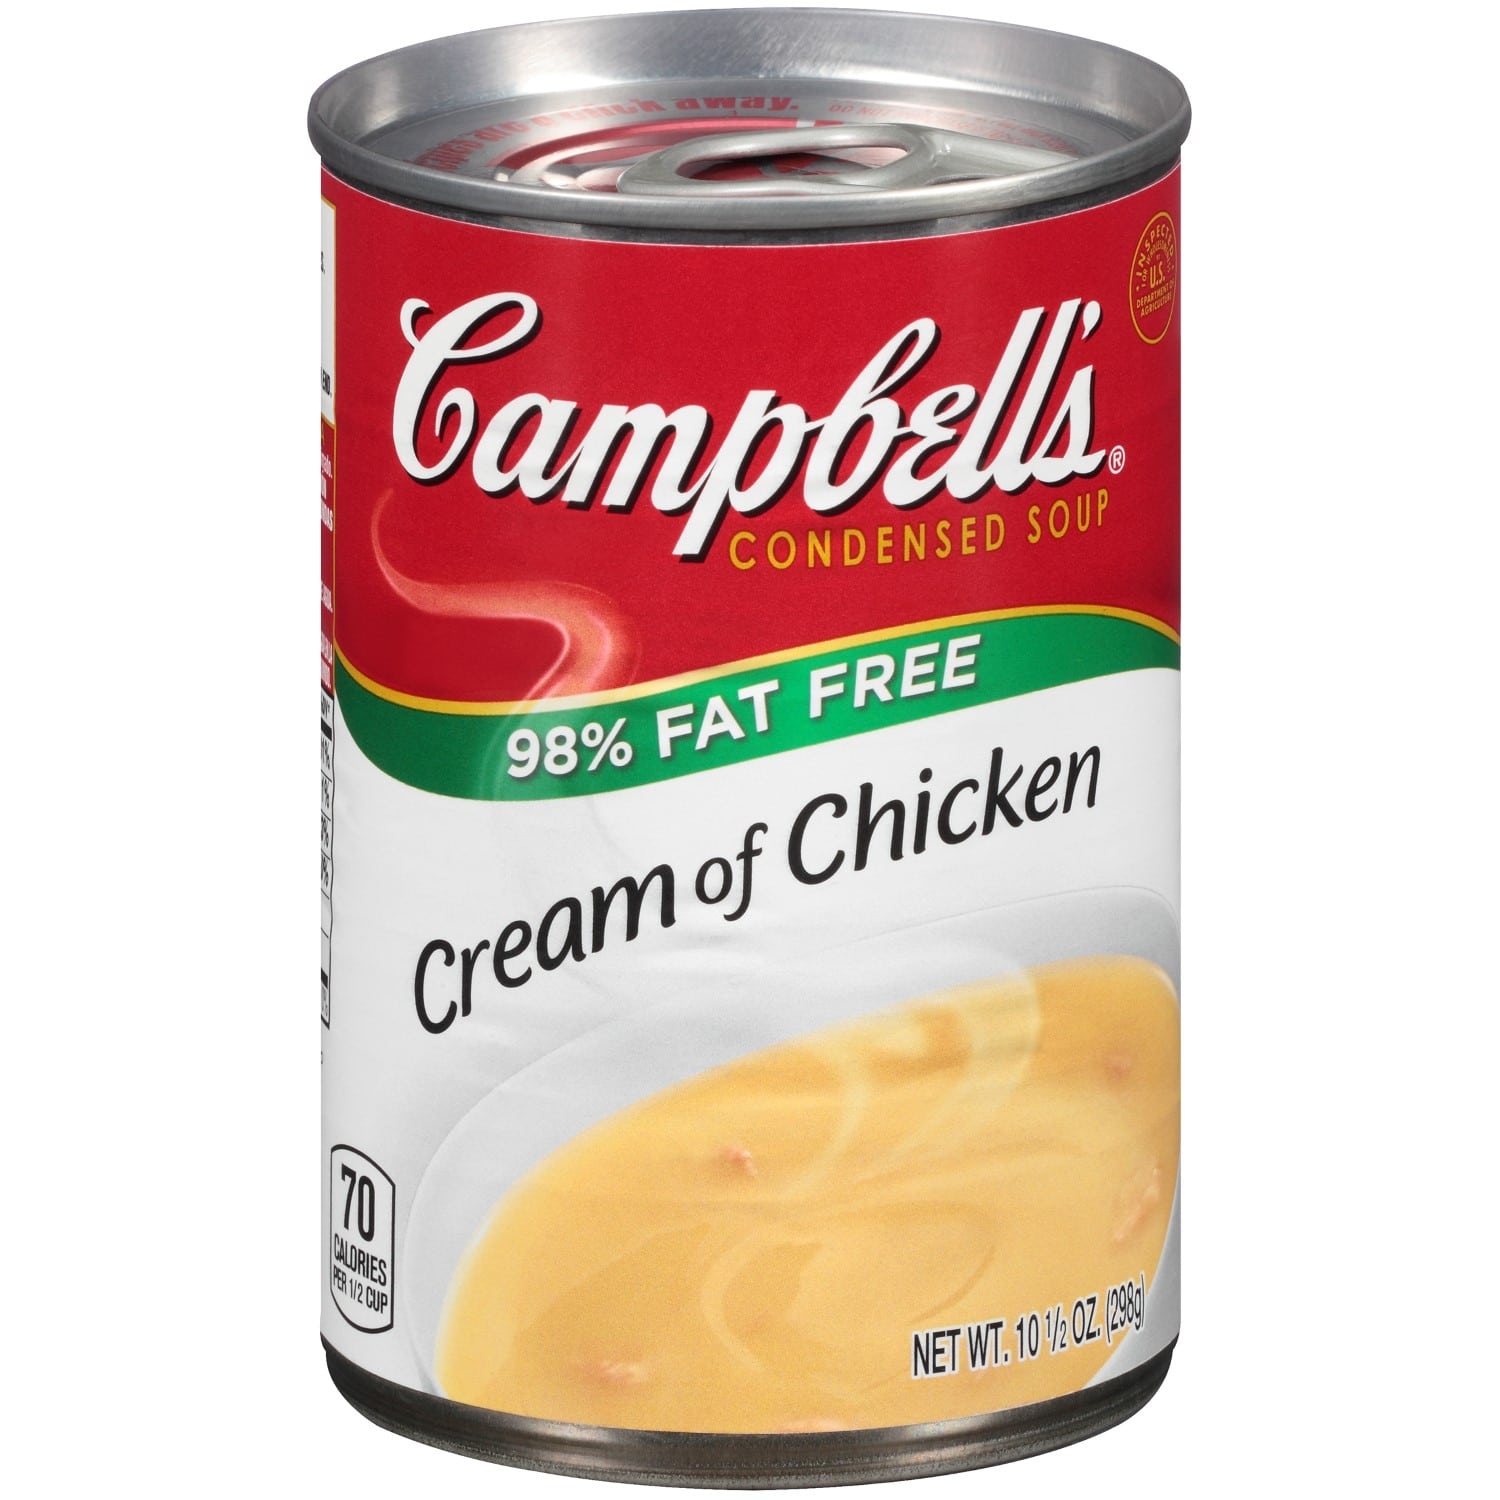 98% Fat Free Cream of Chicken Soup from Kroger | SecretMenus